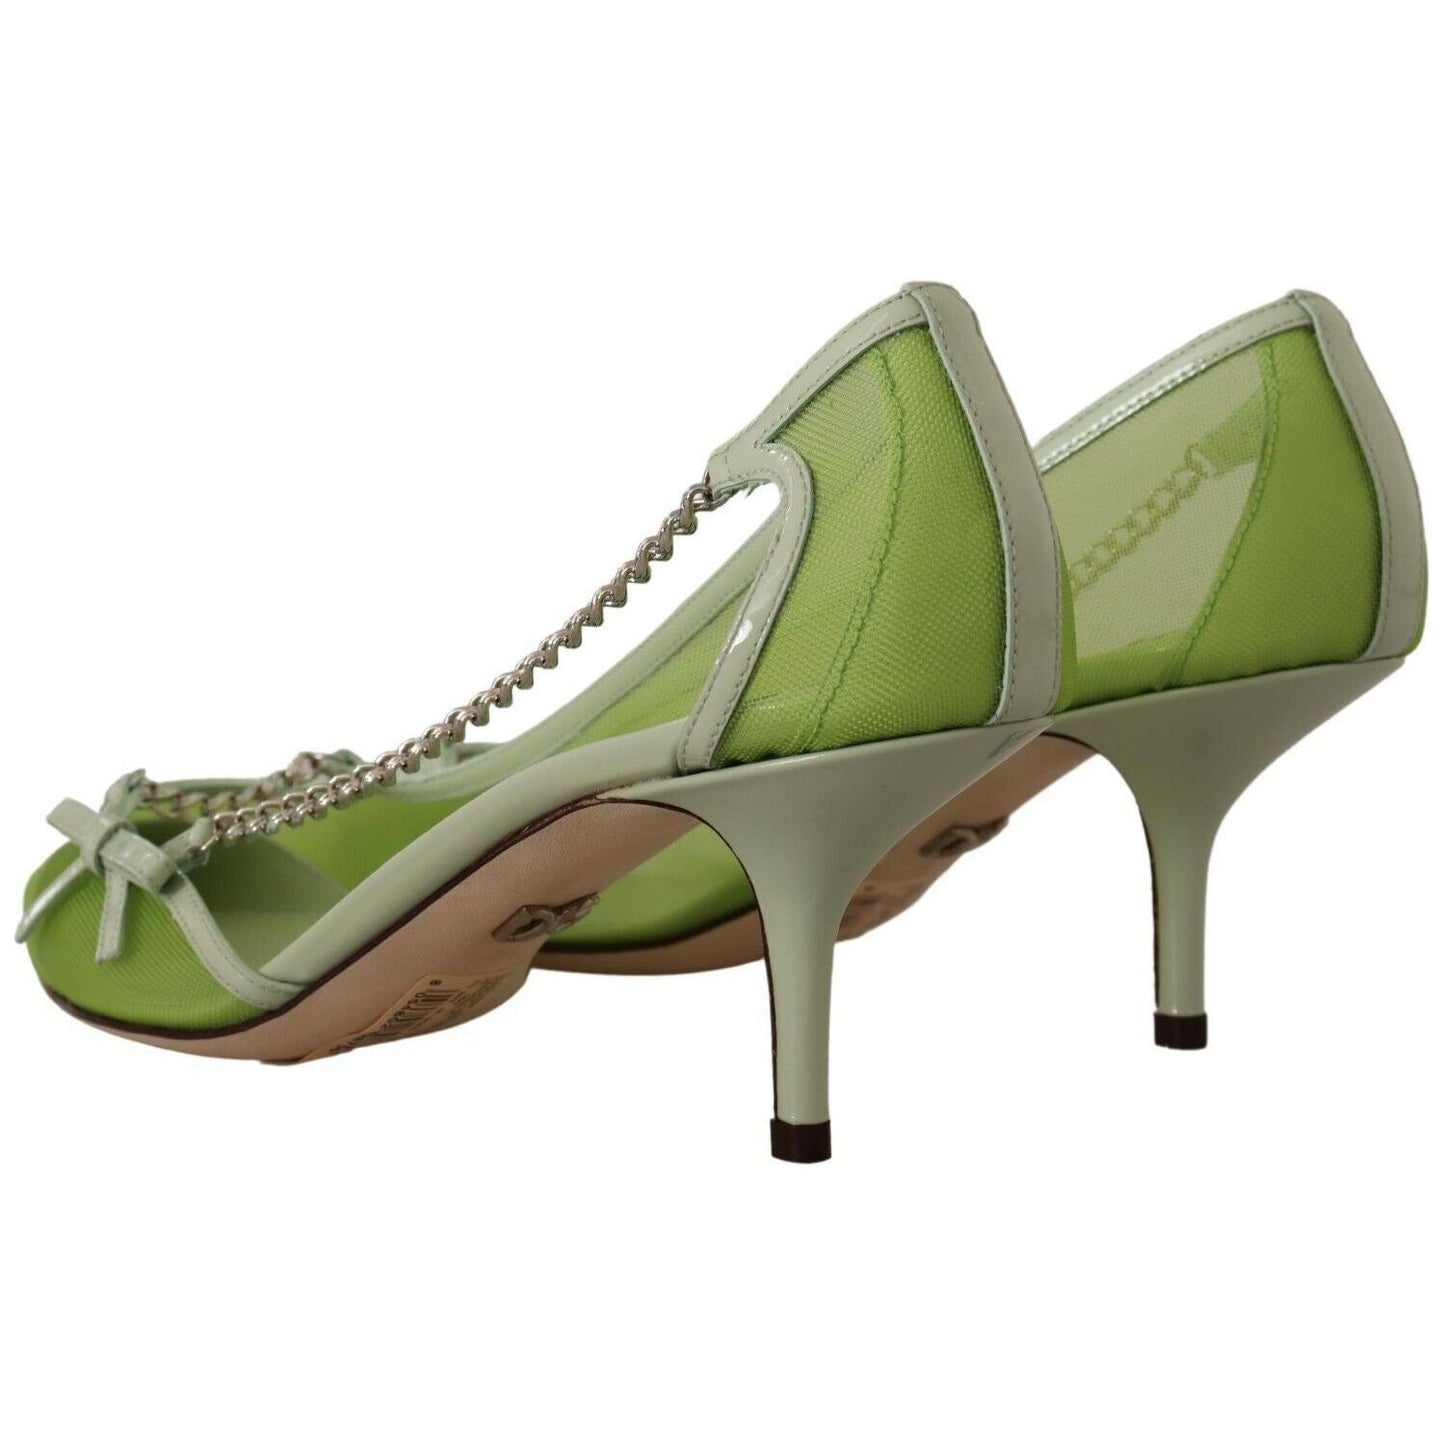 Dolce & Gabbana Enchanting Green Mesh Chain Pumps green-mesh-leather-chains-heels-pumps-shoes s-l1600-3-118-3fe3d380-425.jpg